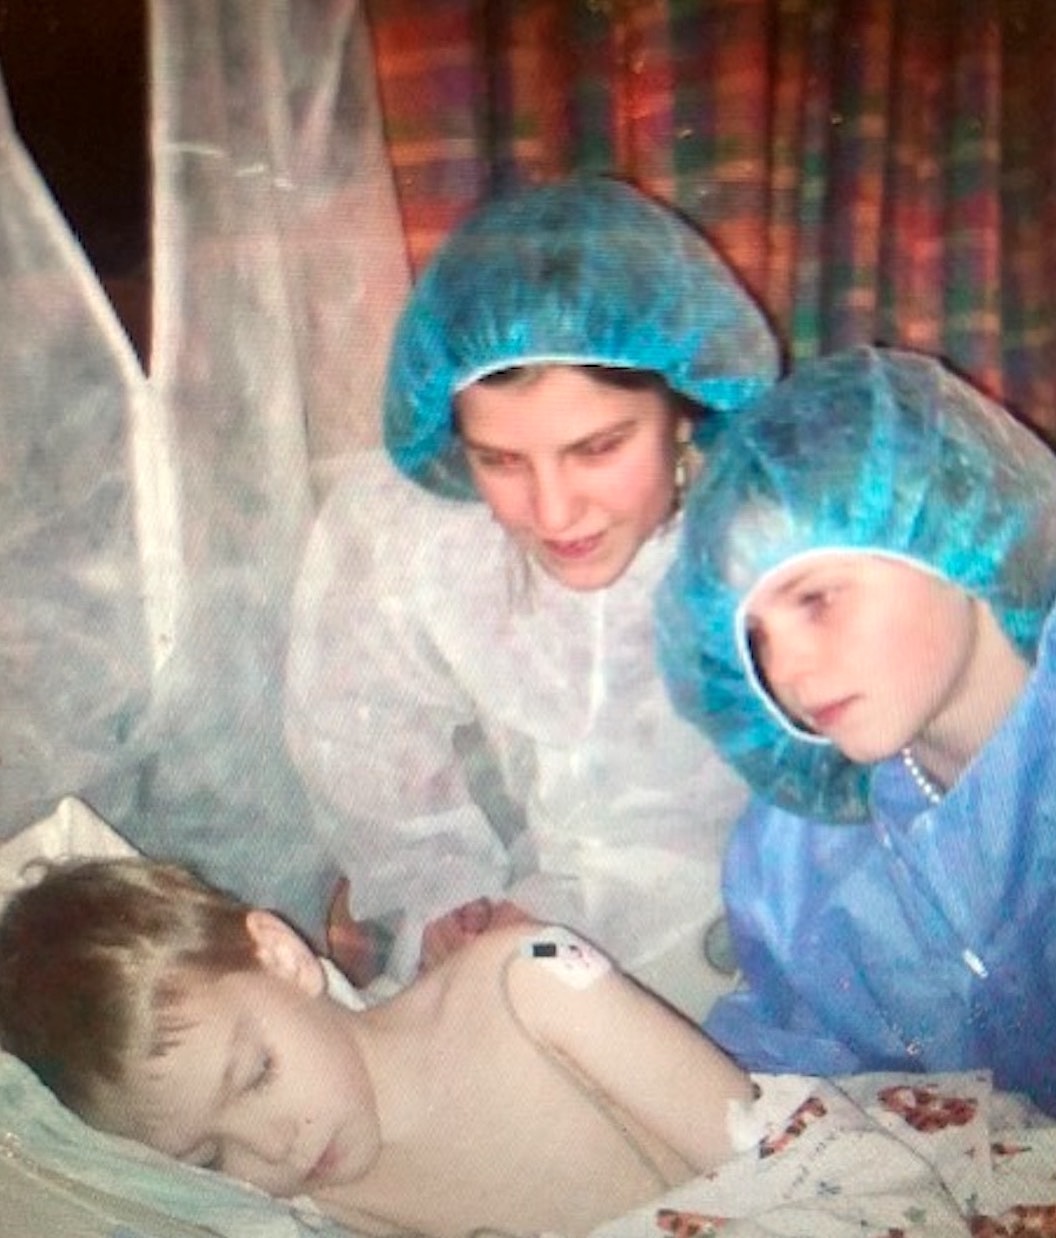 Gavin Vander Schaaf in a hospital bed with his older sisters Lily and Marin. REGINA VANDER SCHAAF